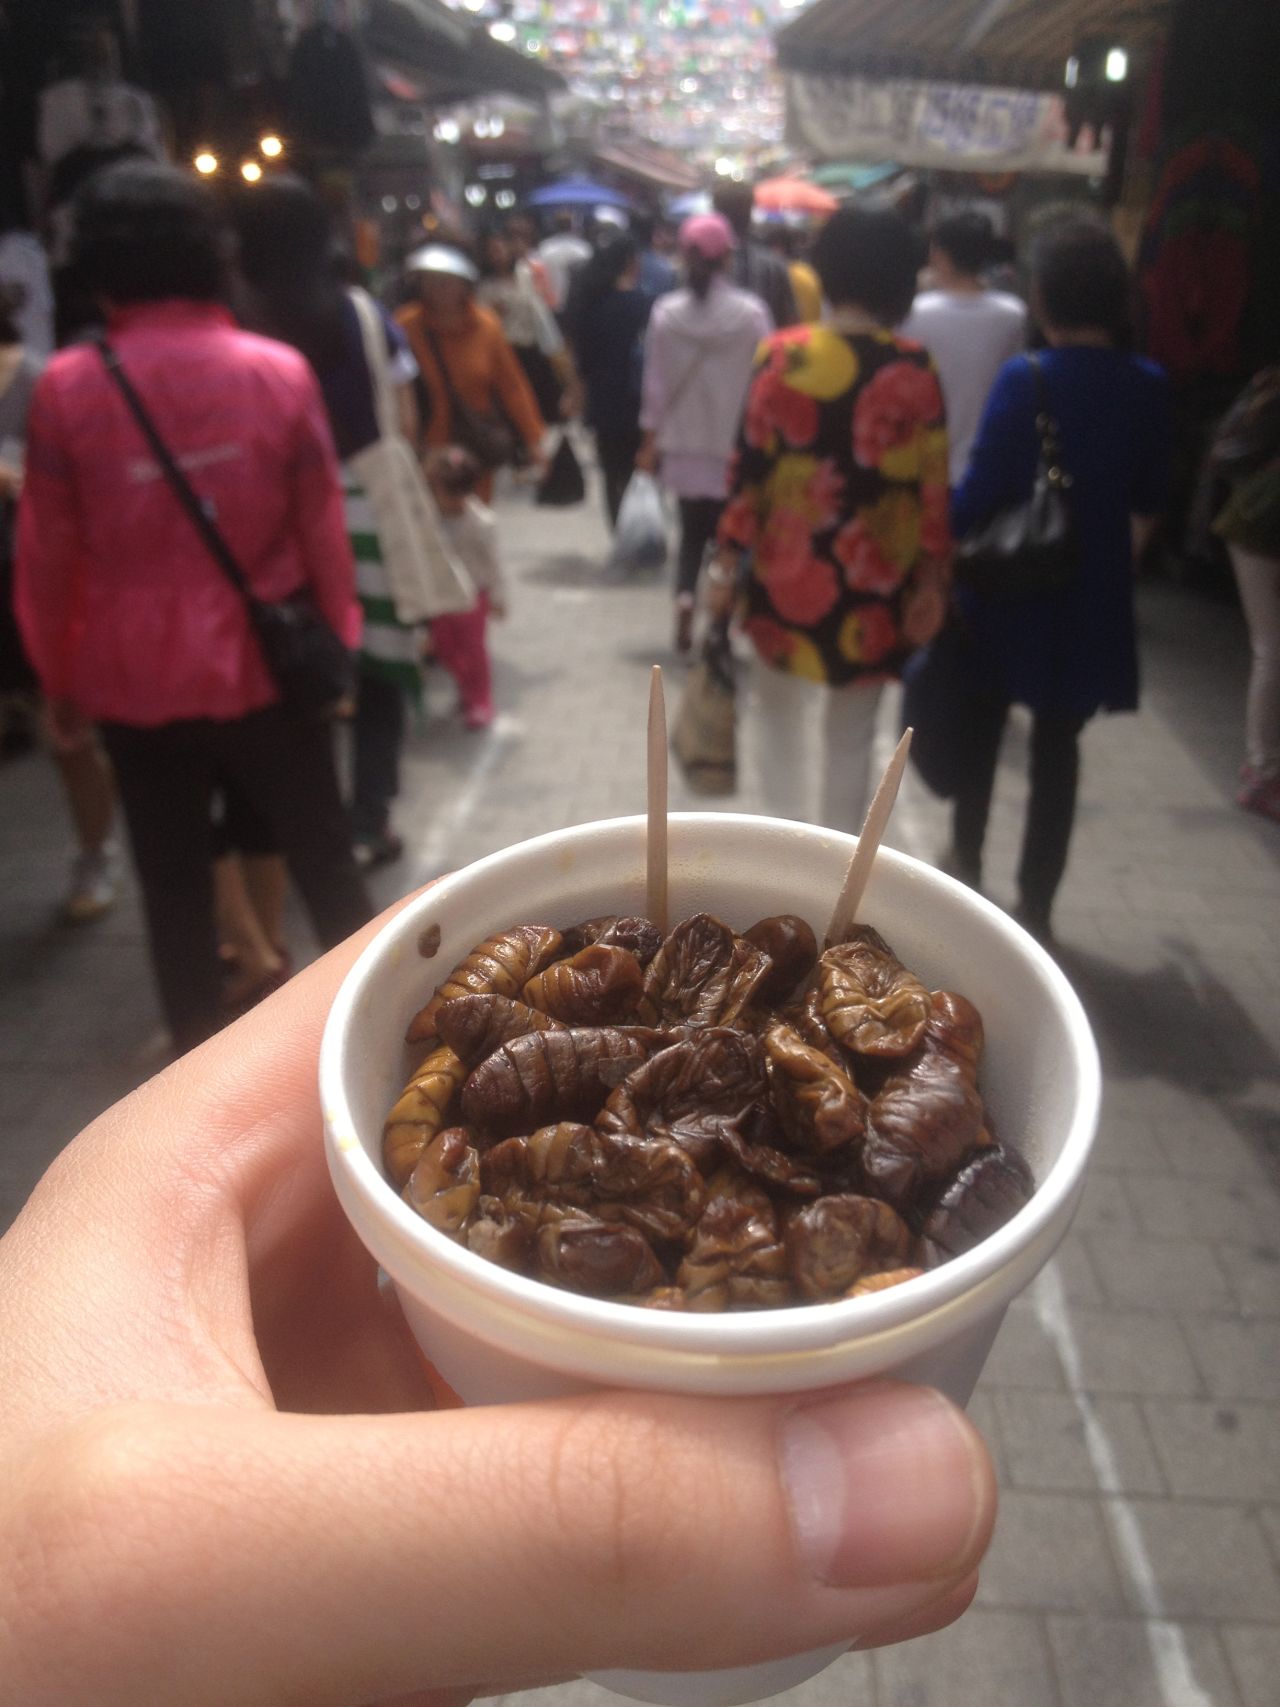 Boiled silkworm in South Korea. 